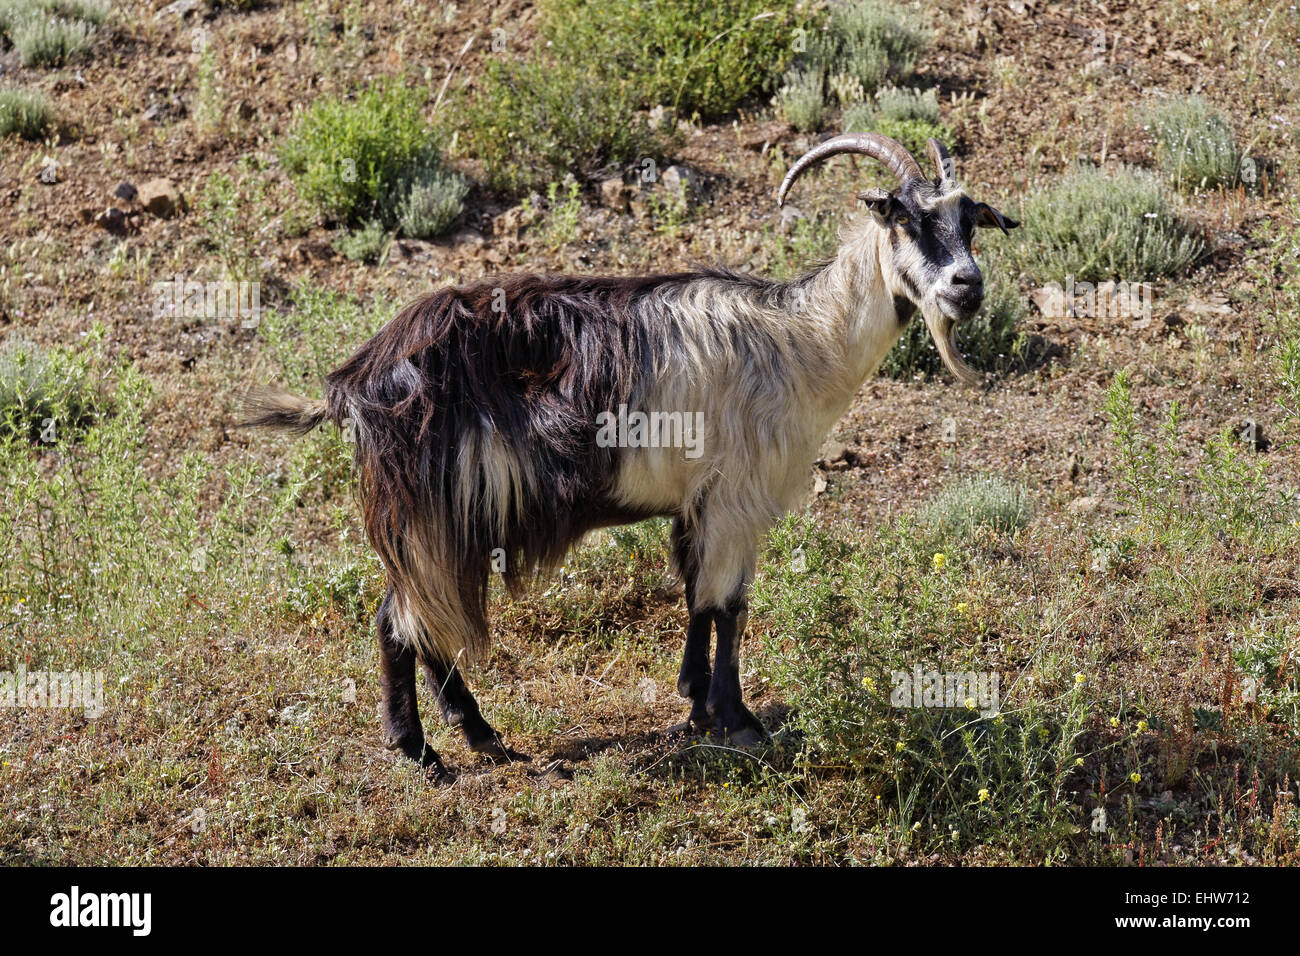 Goat near Belgodere, Nebbio region, Corsica Stock Photo